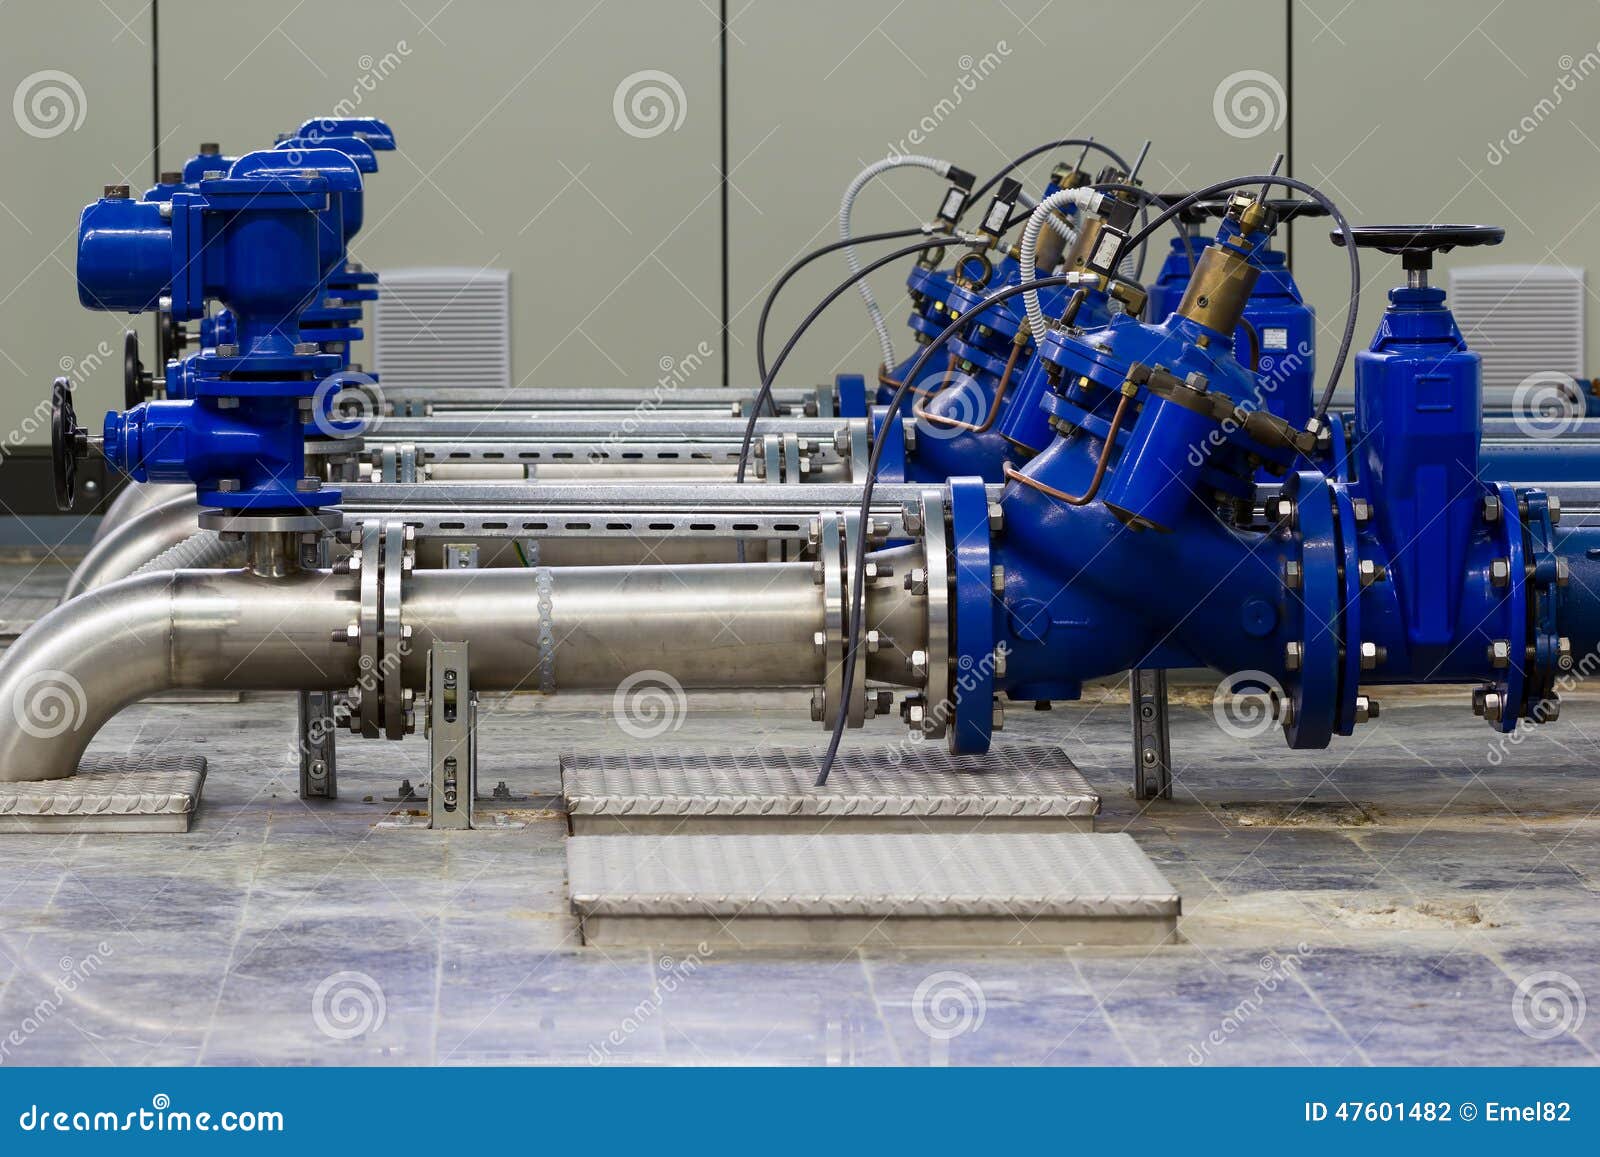 industrial water pumping